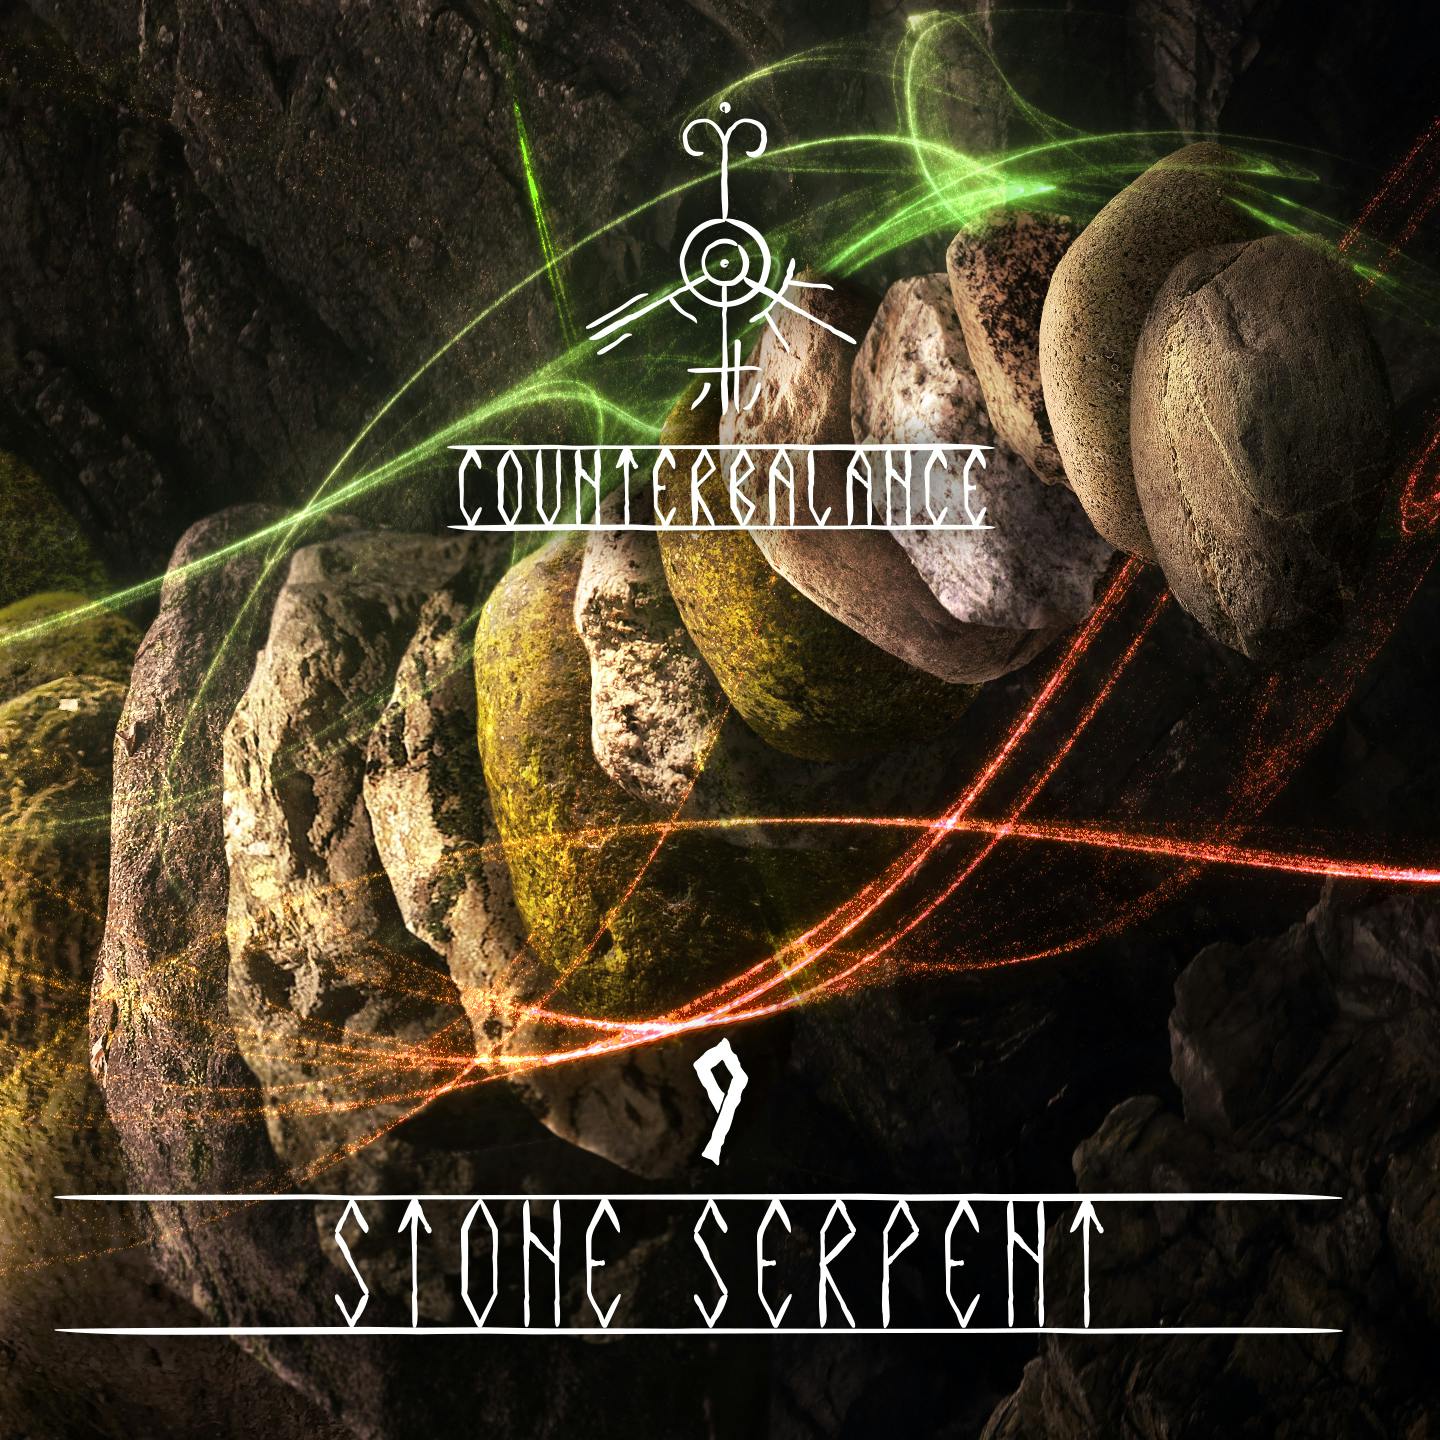 09 | Stone Serpent